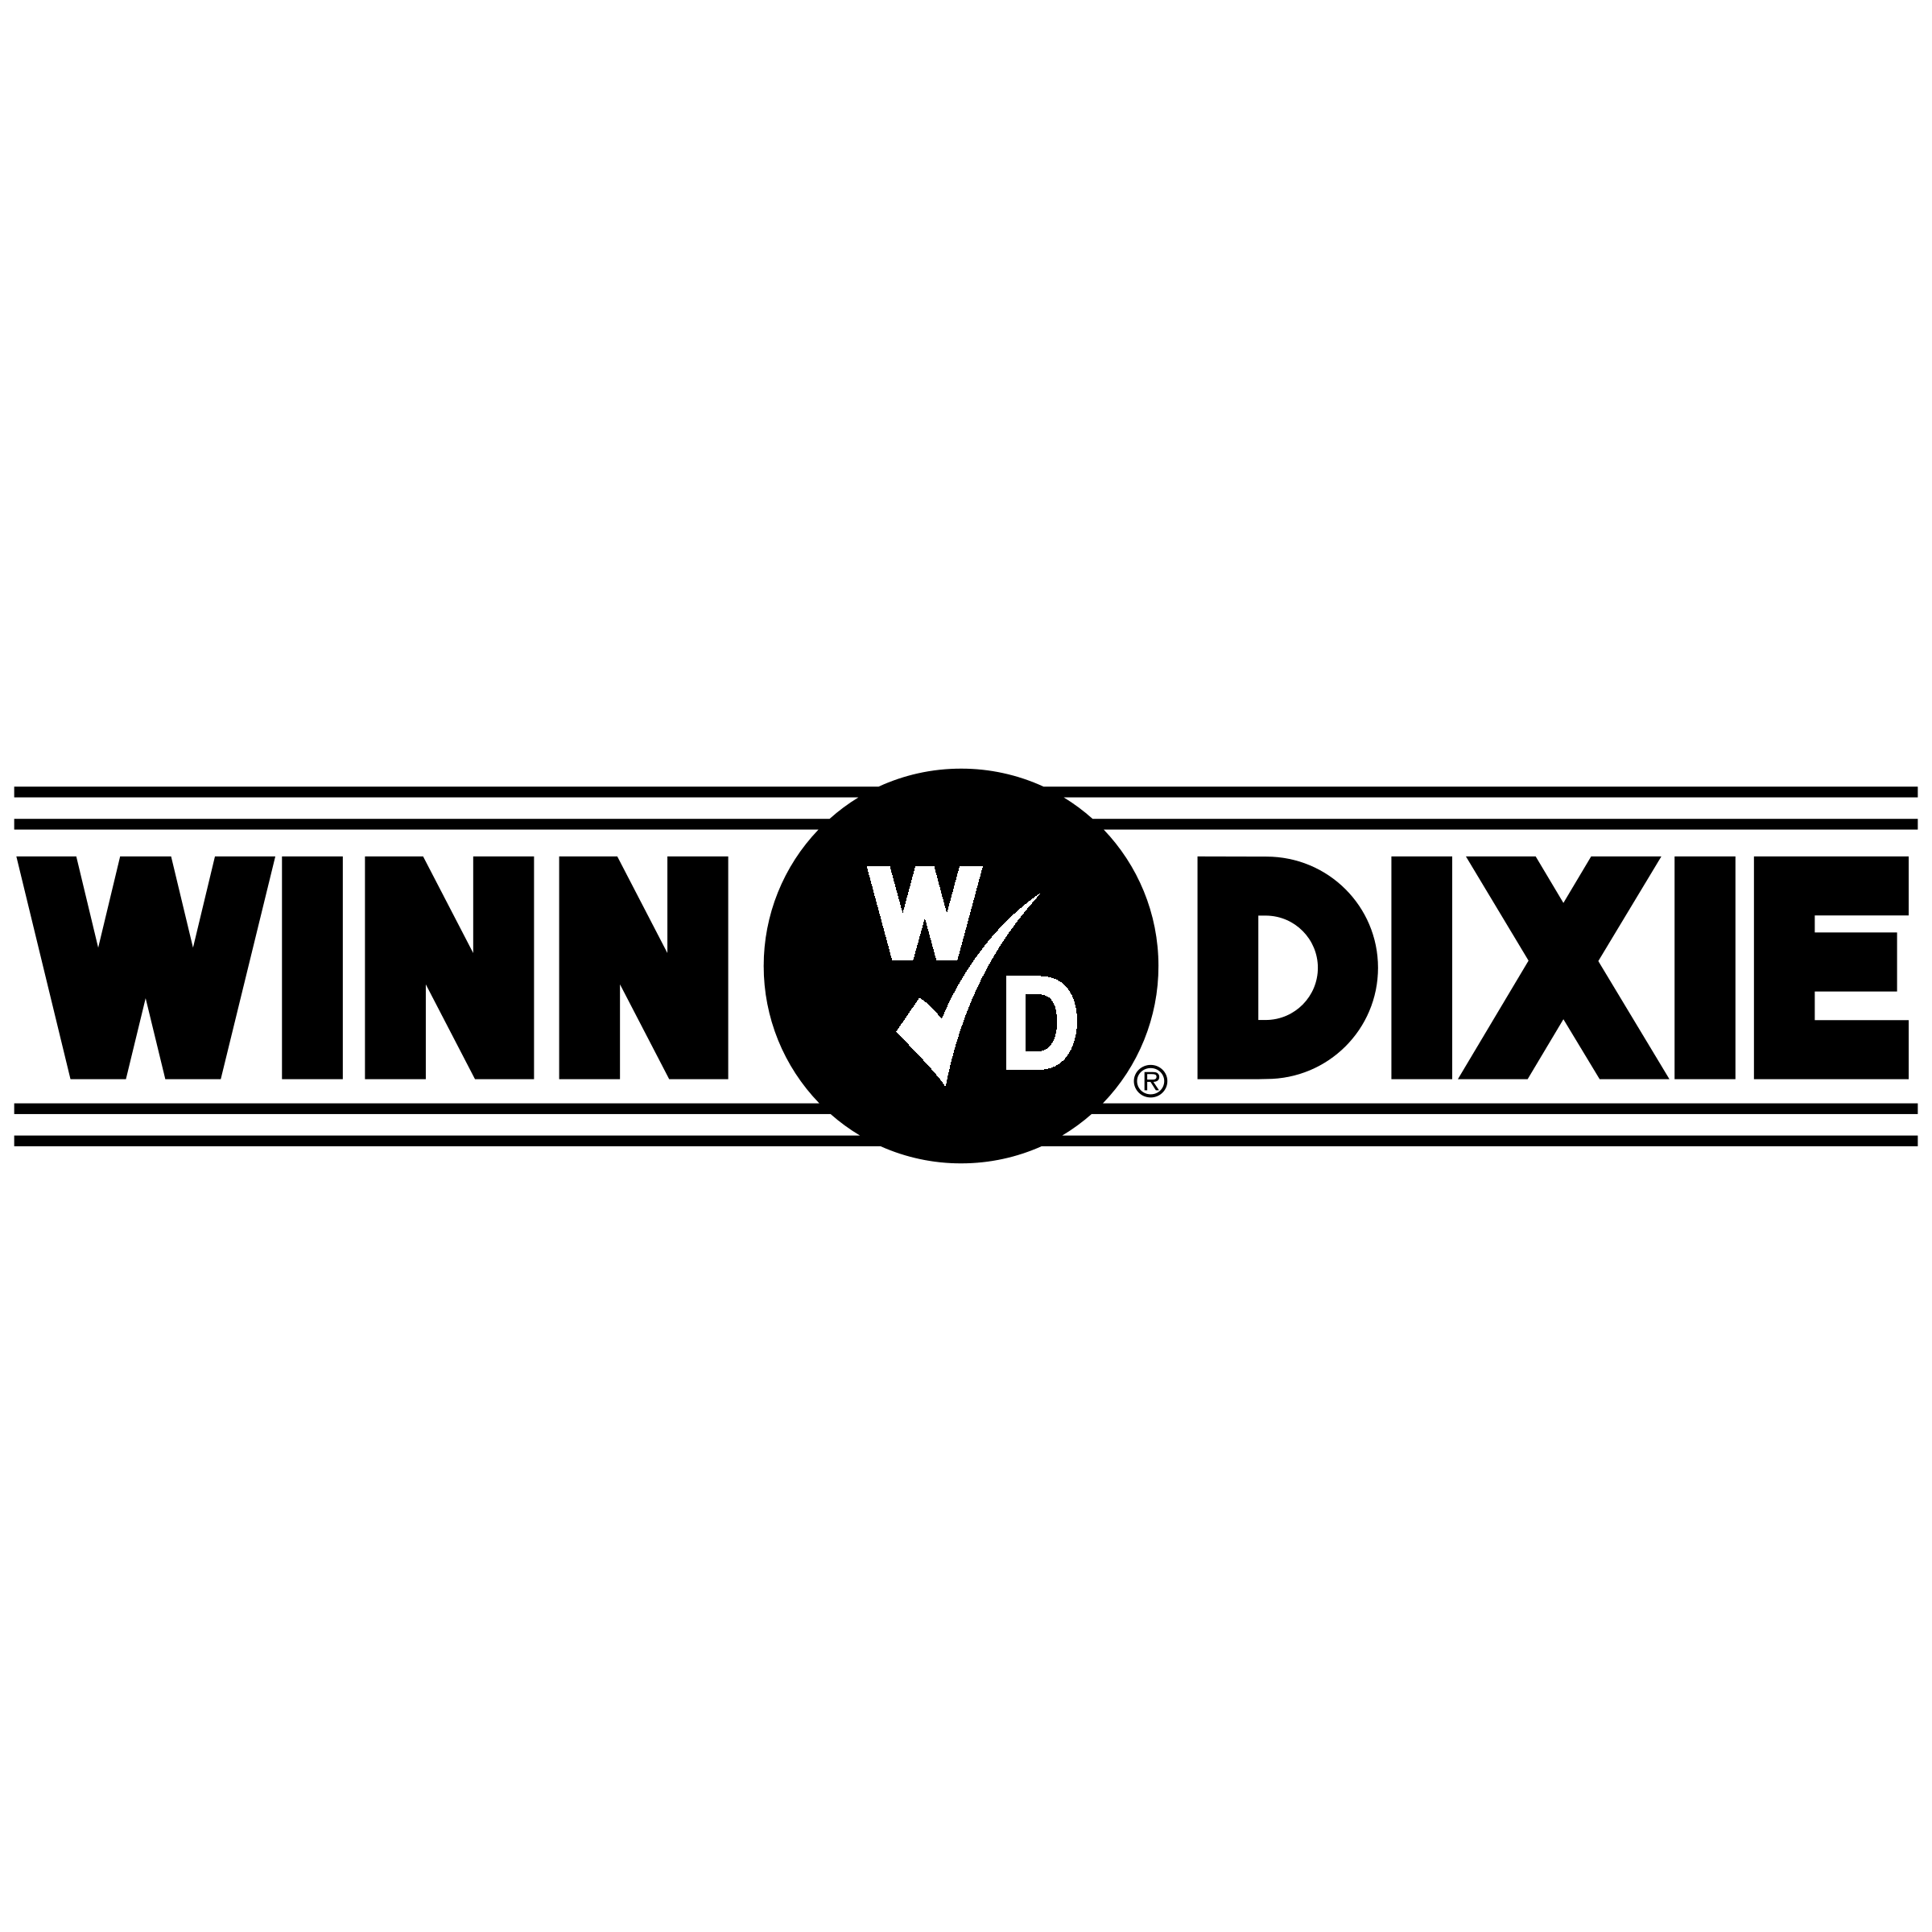 Dixie Logo - Winn Dixie Logo PNG Transparent & SVG Vector - Freebie Supply